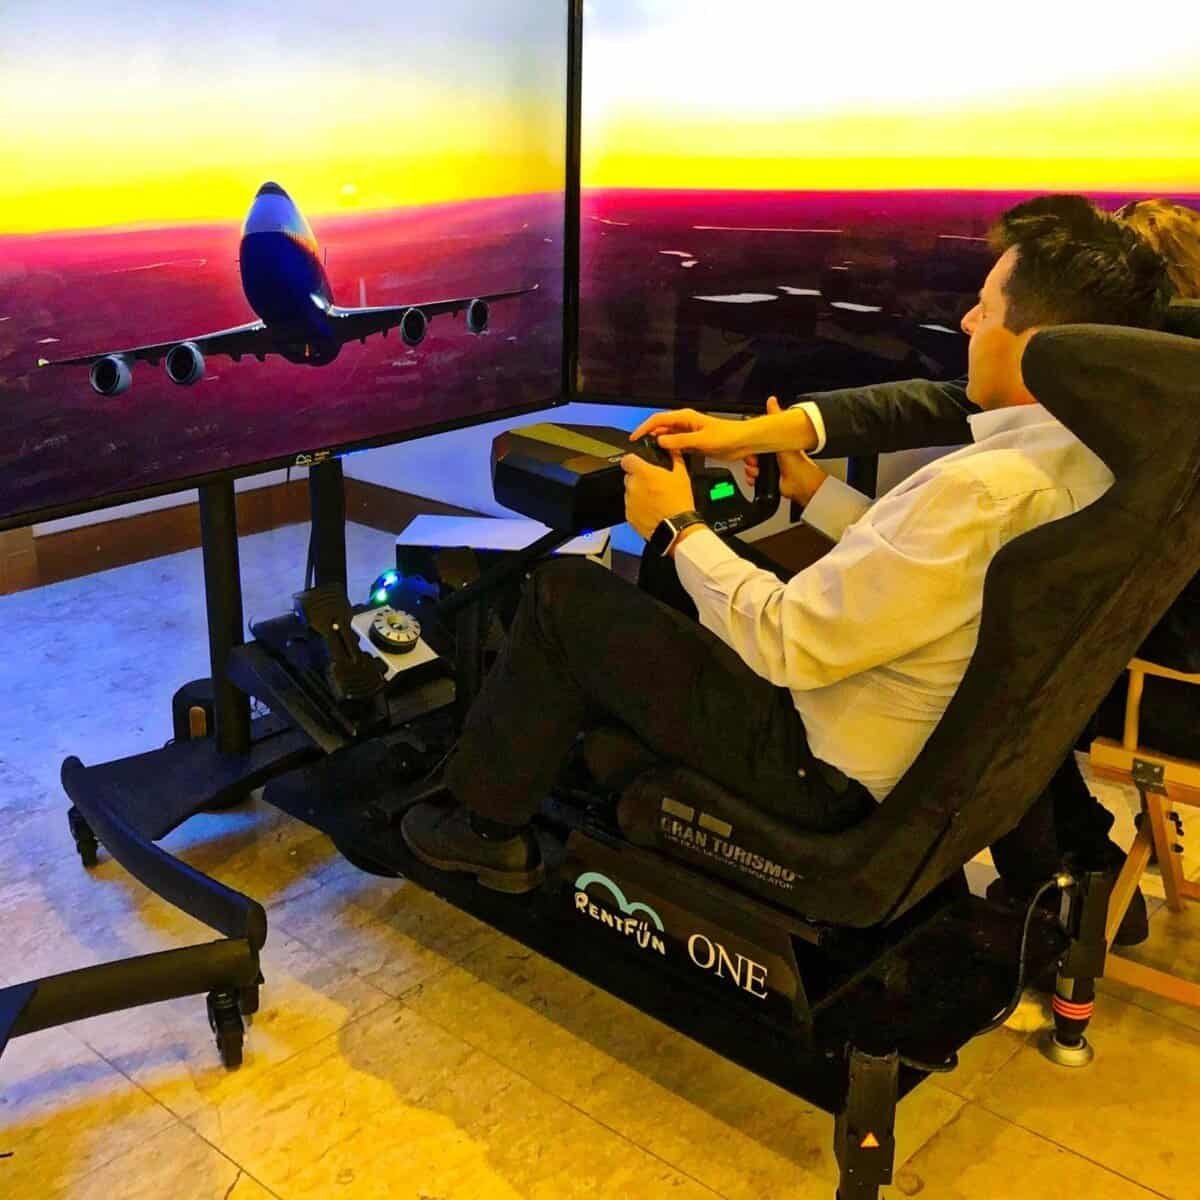 RoarFun Clients Hewlett Packard Enterprise immersive aeroplane simulator at the local 5 star hotel airport